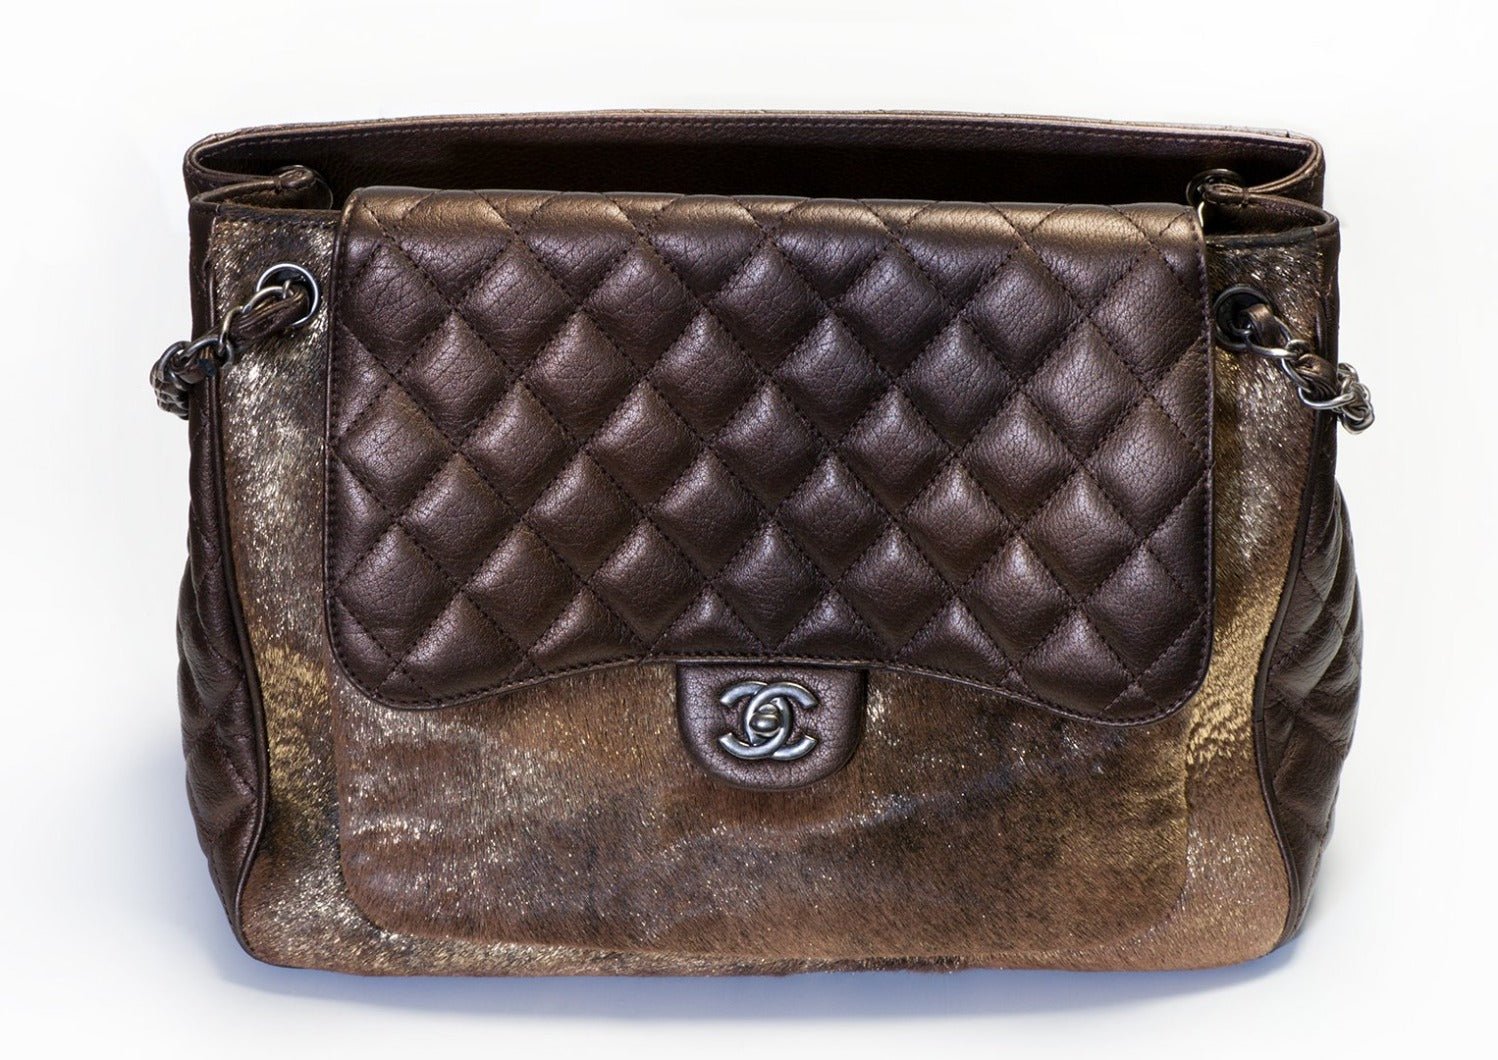 CHANEL Paris 2015 Brown Ombré Quilted Leather Mink Fur Tote Bag